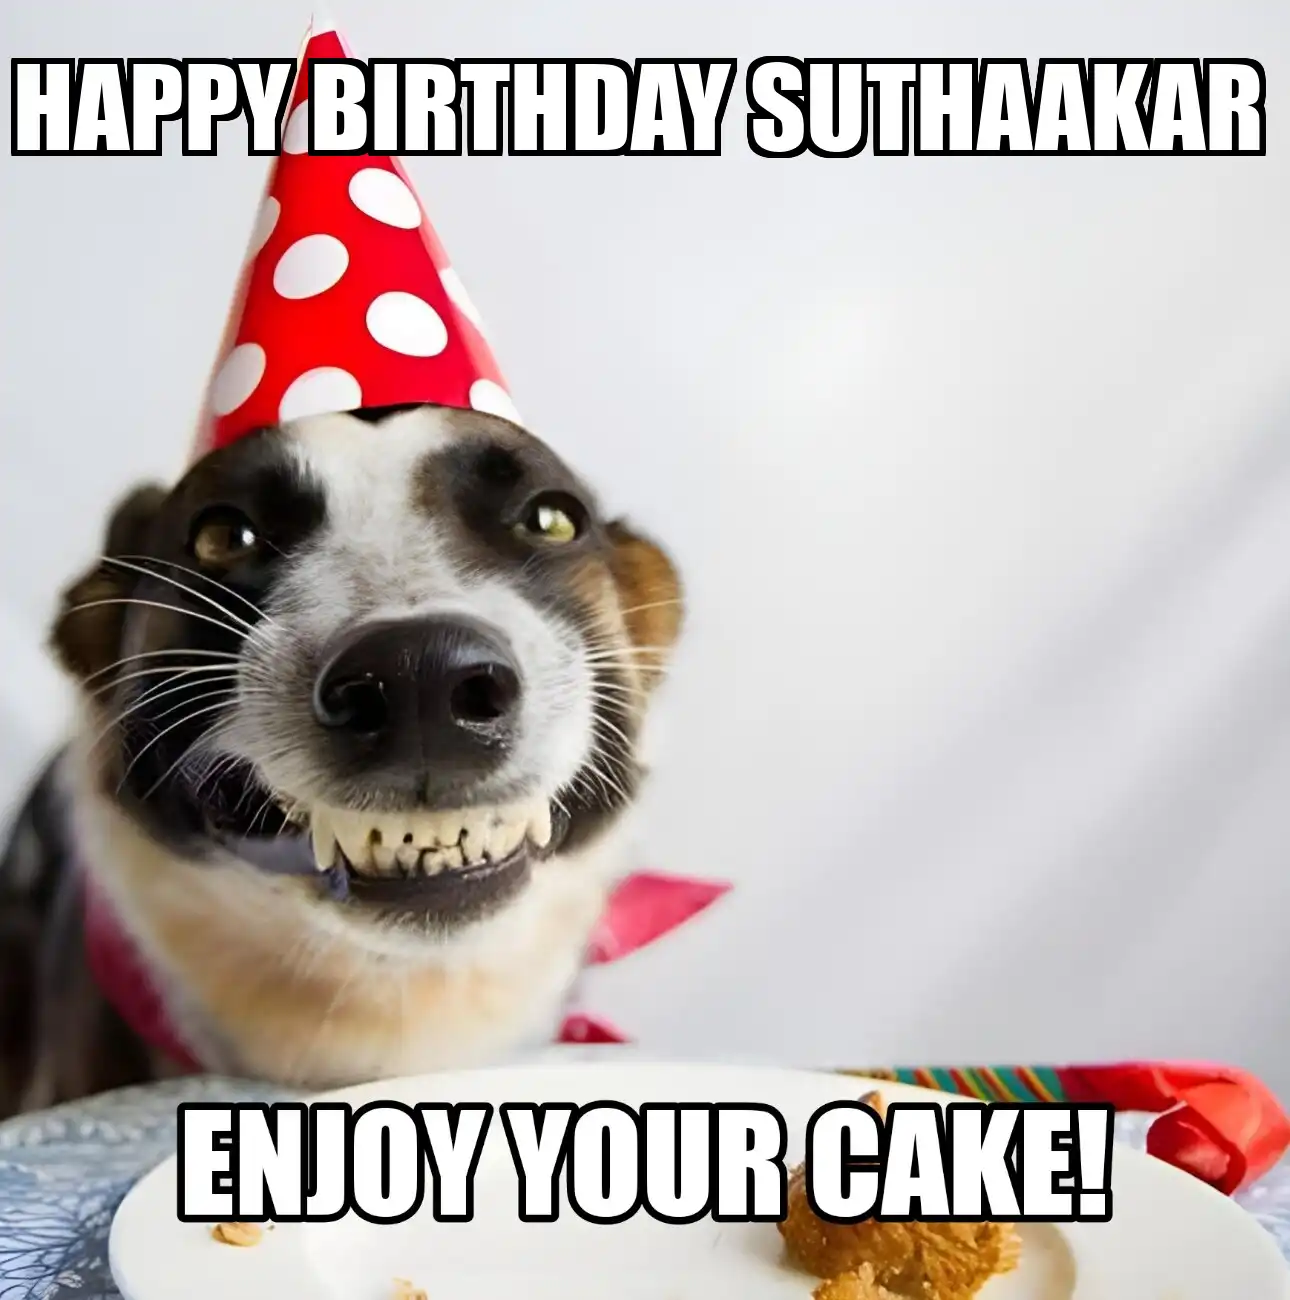 Happy Birthday Suthaakar Enjoy Your Cake Dog Meme